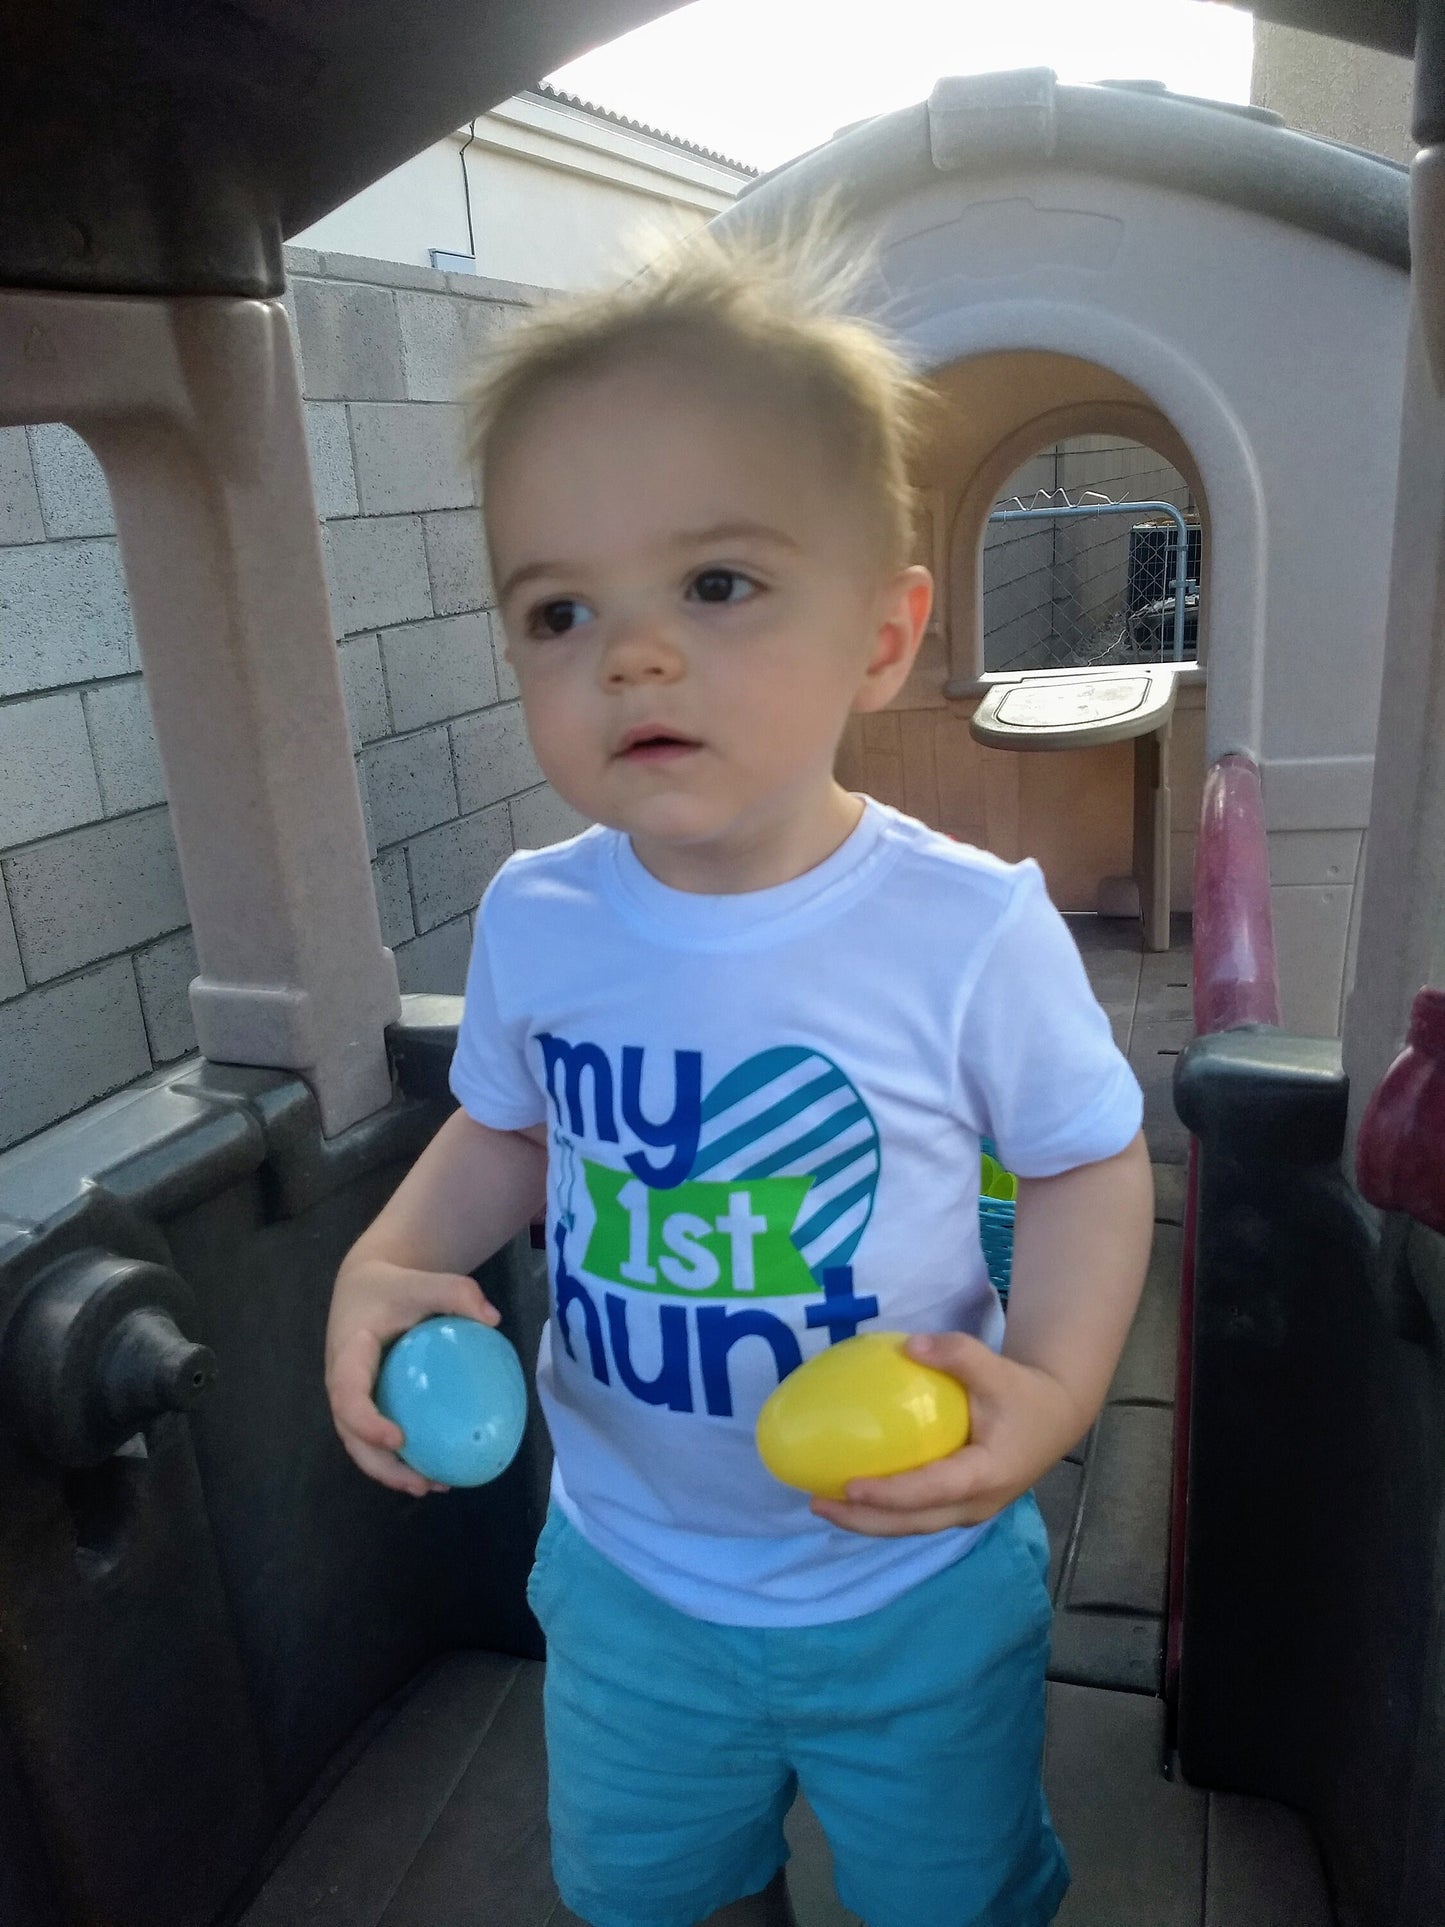 My First Hunt Infant or Toddler Easter Shirt - Easter Egg Hunt Shirt - Easter Egg Shirt - First Easter Shirt - Egg Hunt Outfit